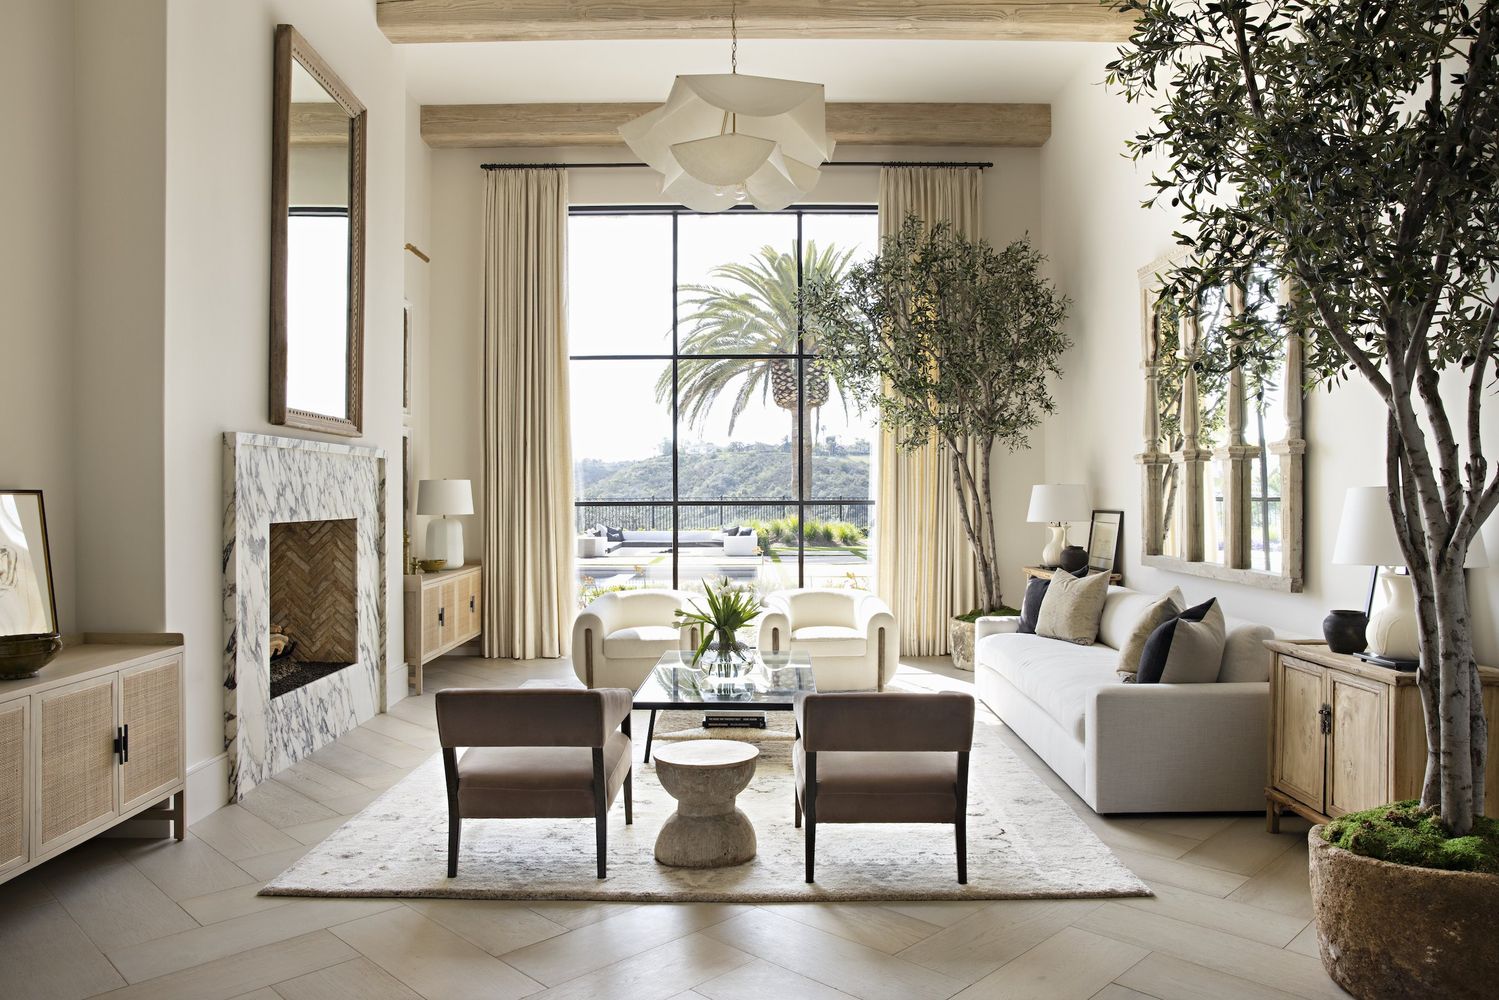 How to Arrange Living Room Furniture Layouts intimatelivinginteriors